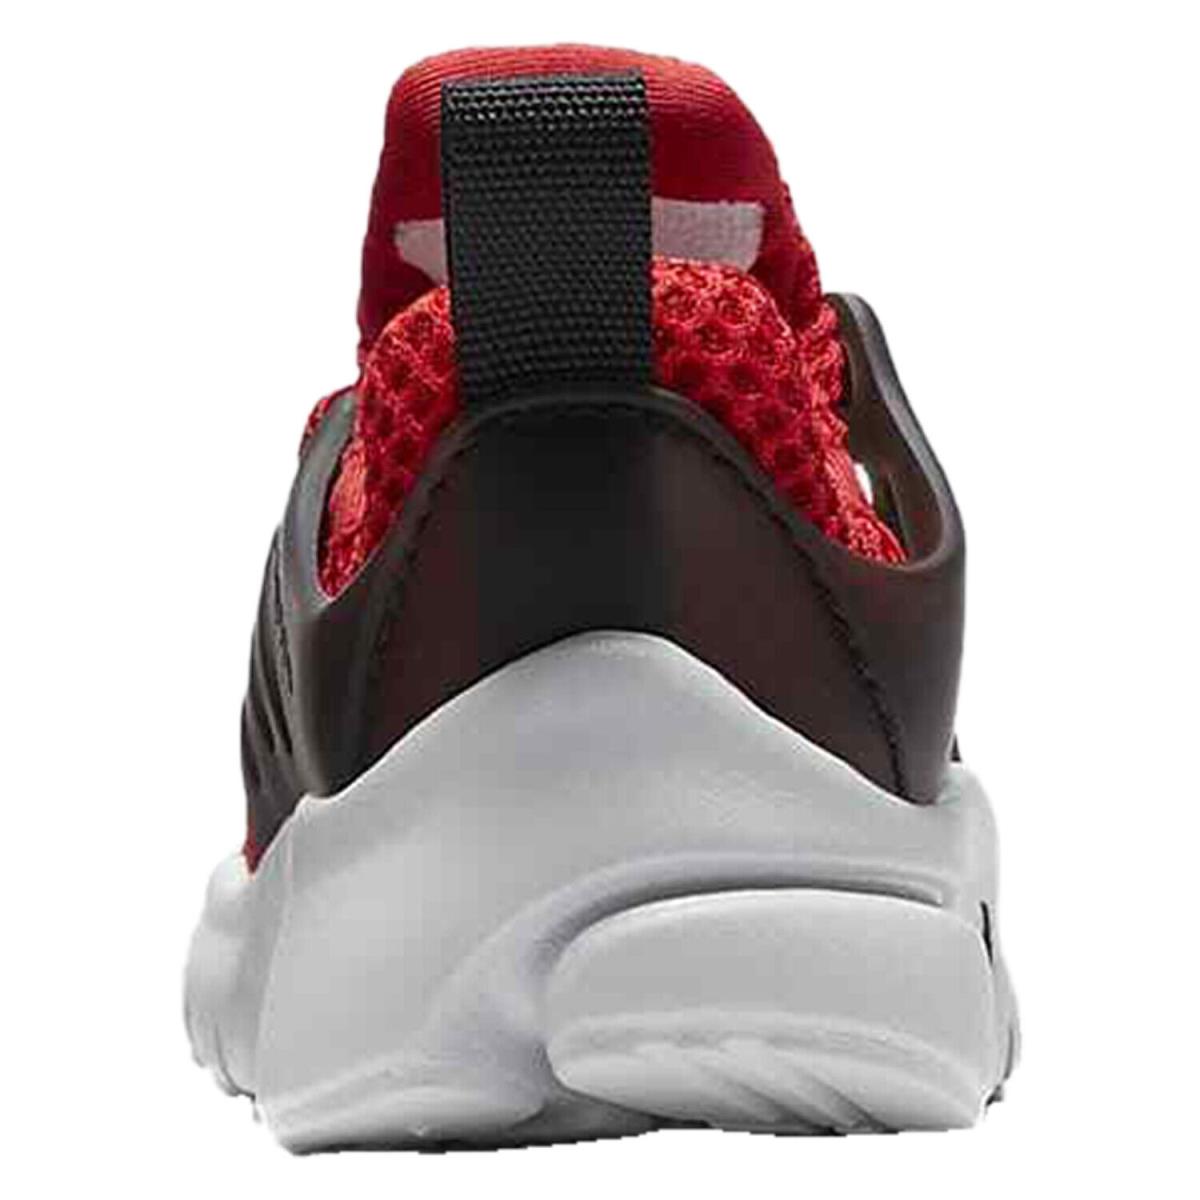 Nike Little Presto Toddlers Style : 844767-600 - University Red/Black-Black